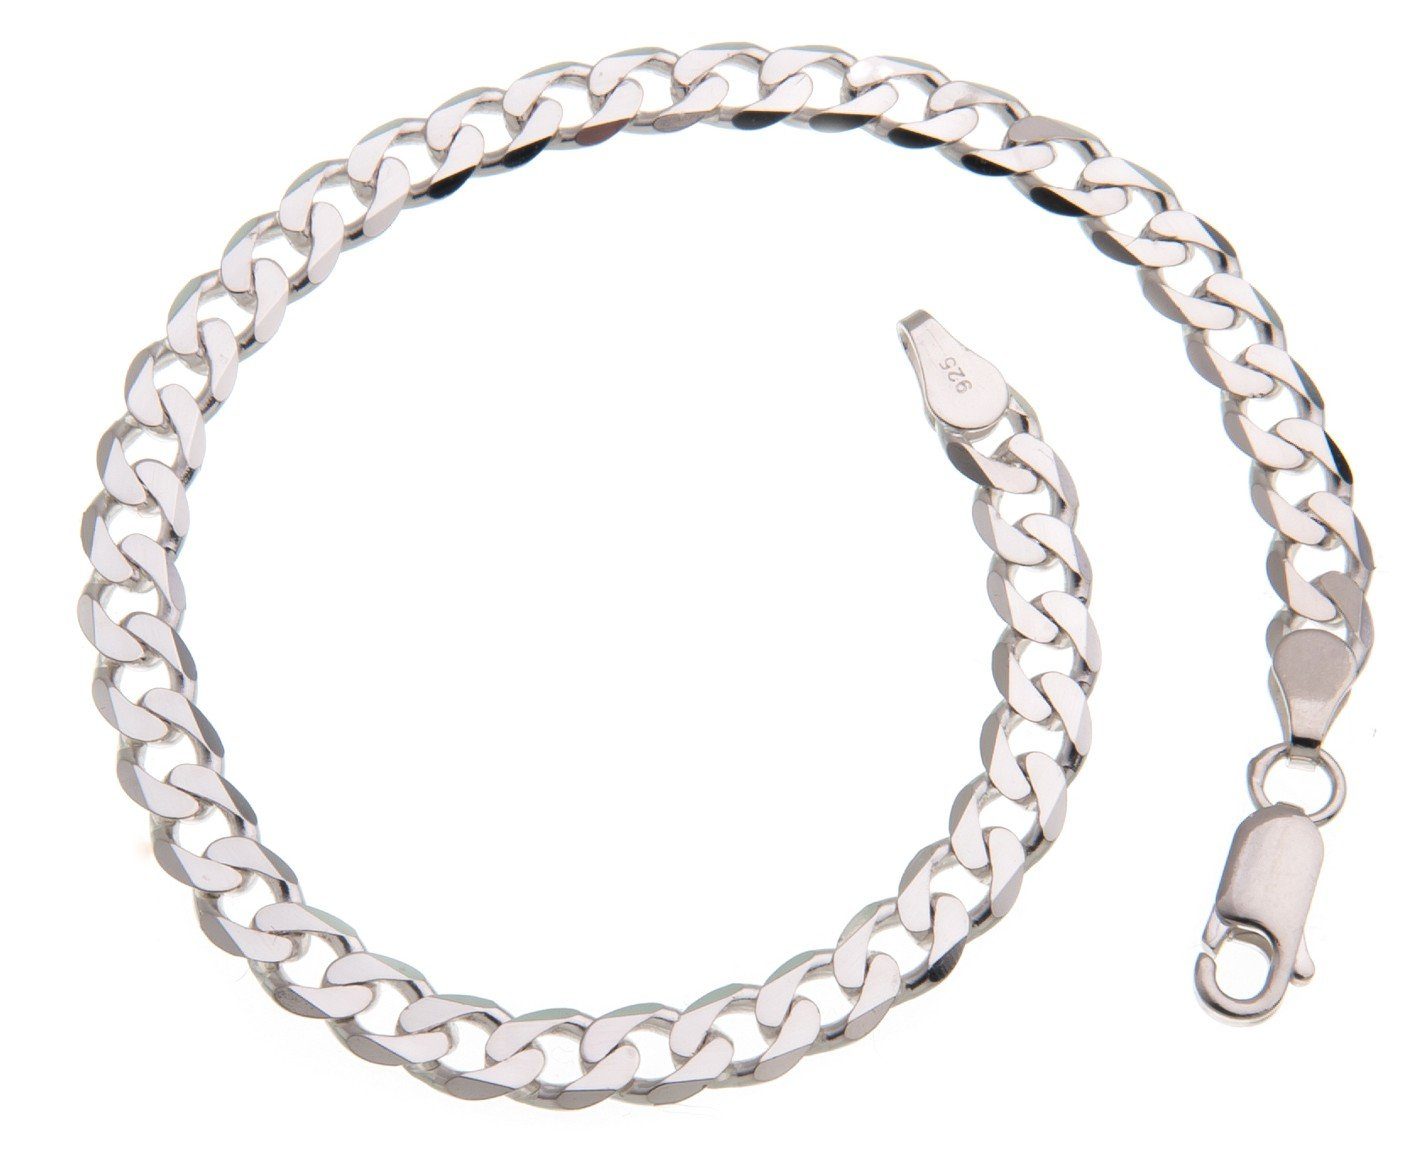 Silberkettenstore Silberarmband »Panzerkette Armband 5mm, 925 Silber,  16-25cm« online kaufen | OTTO